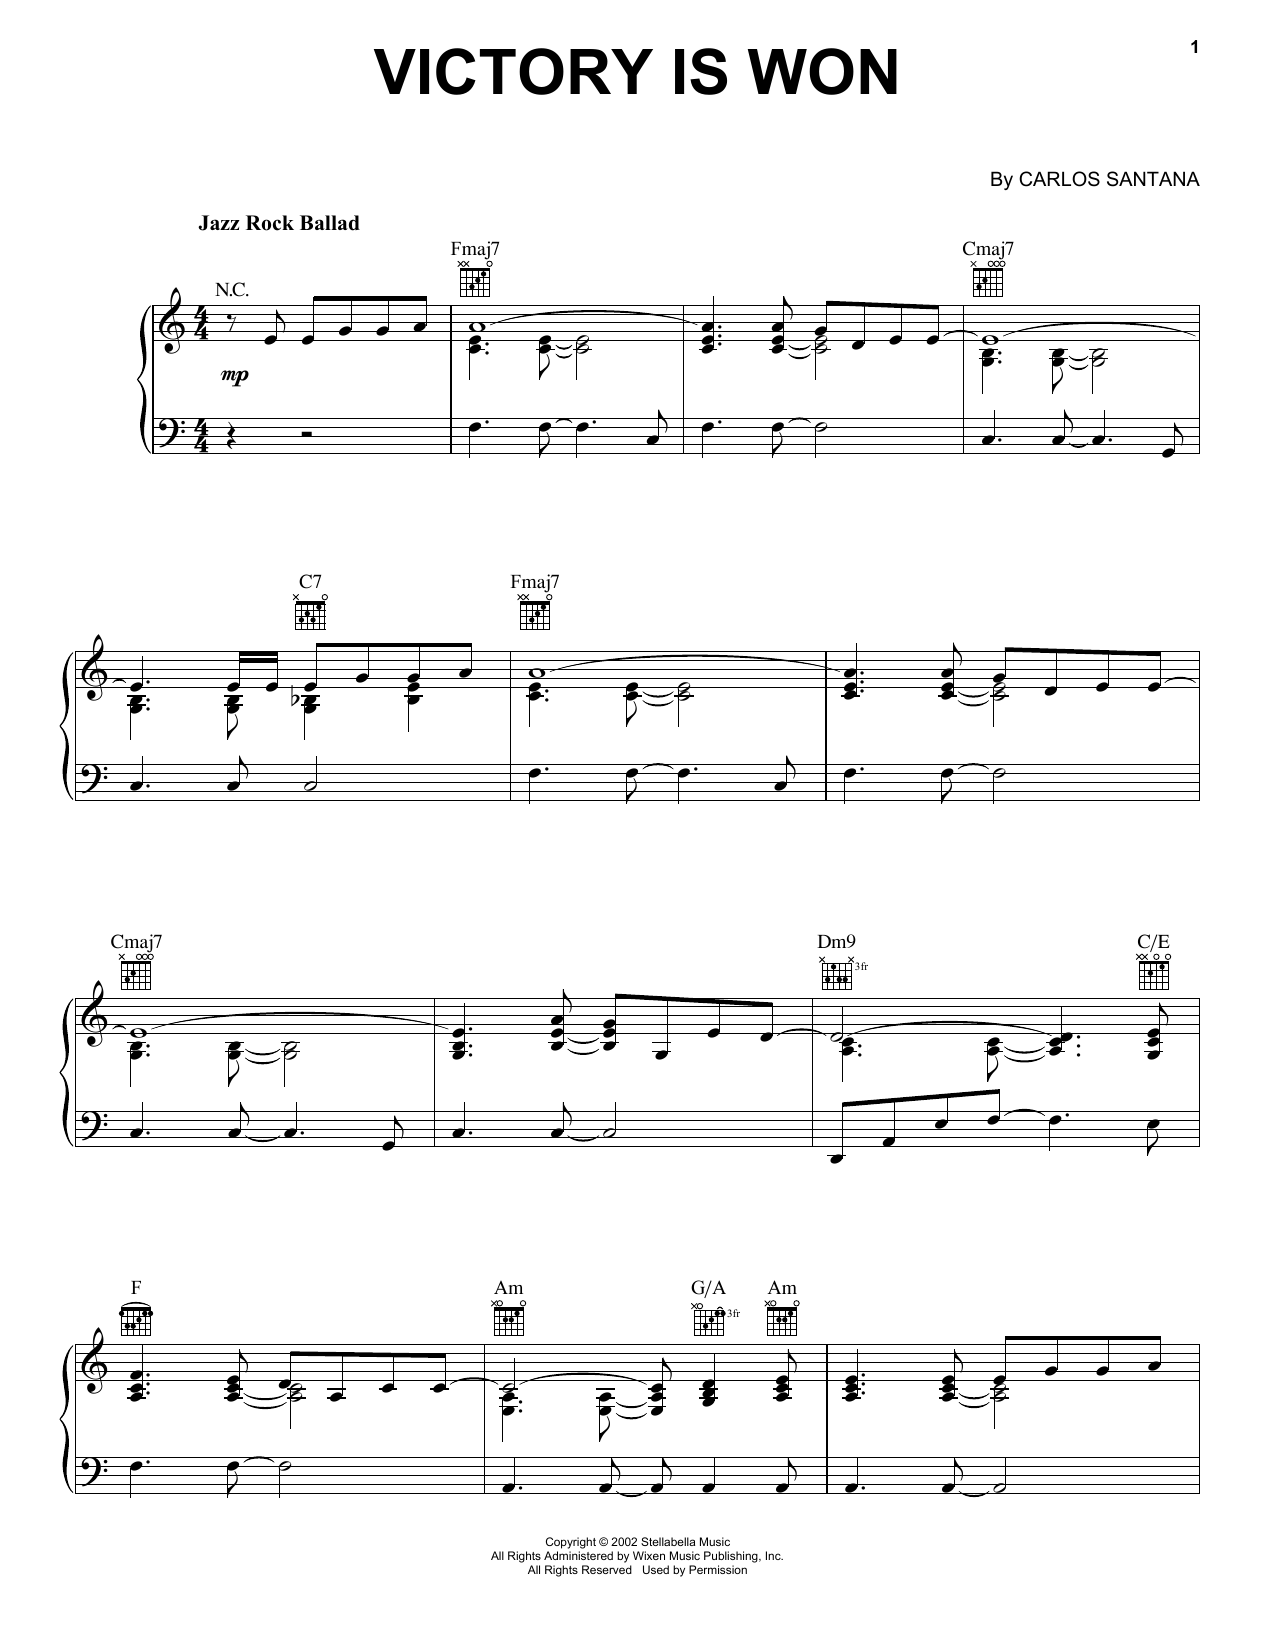 Santana Victory Is Won Sheet Music Notes & Chords for Piano - Download or Print PDF